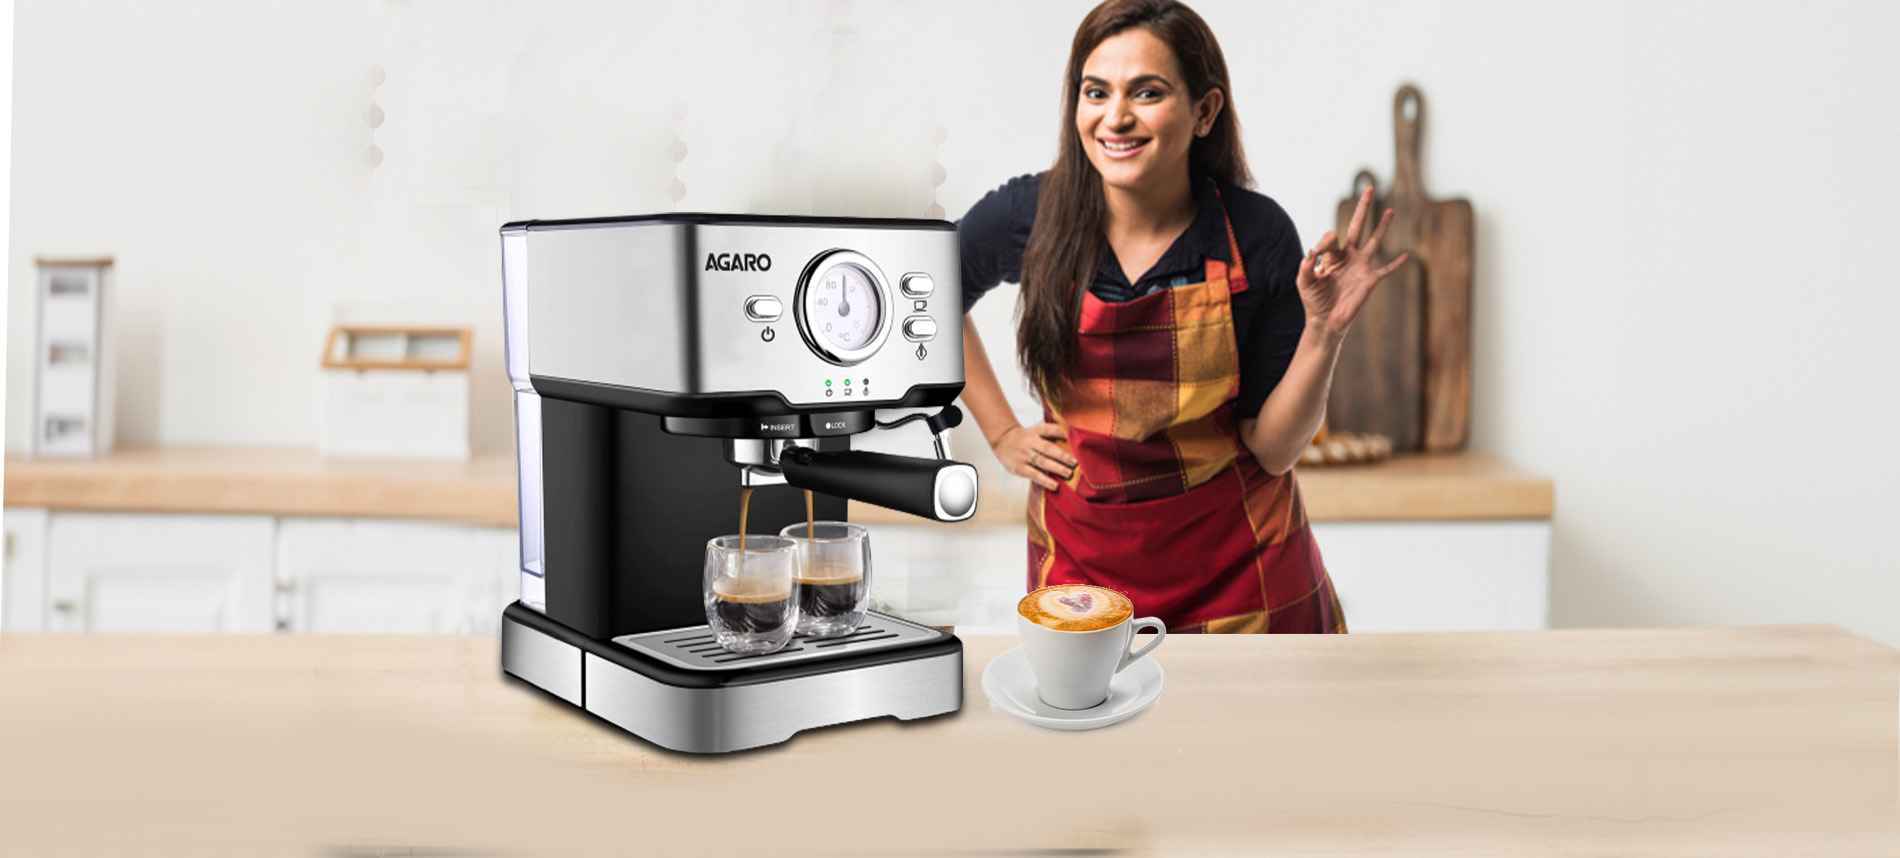 GAOF Professional Electric Espresso Coffee Maker Automatic Pump Pressure  Fancy Coffee Machine Milk Frother Pot Foam Bubble